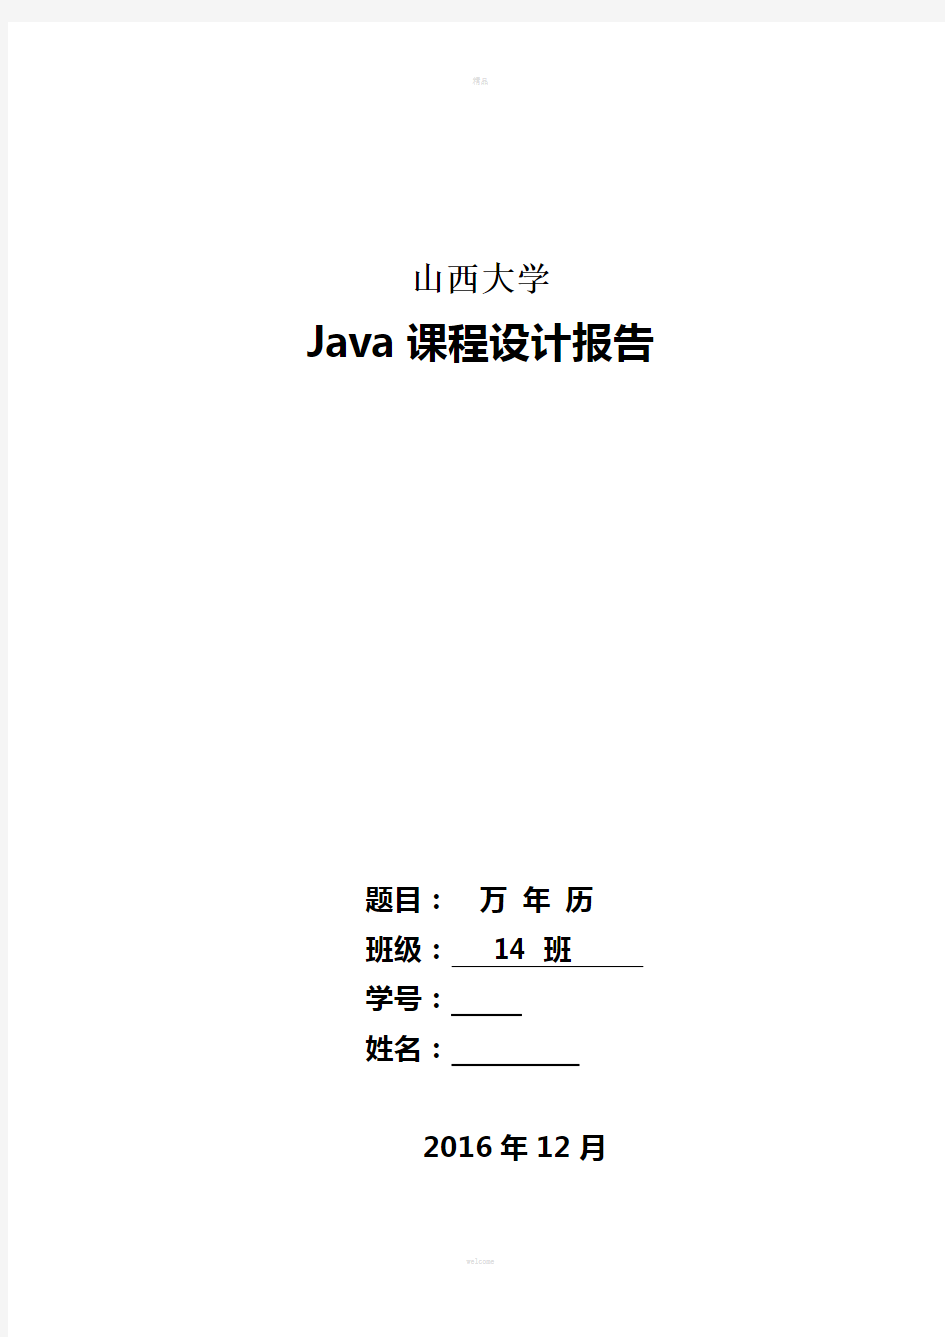 java课程设计报告-万年历